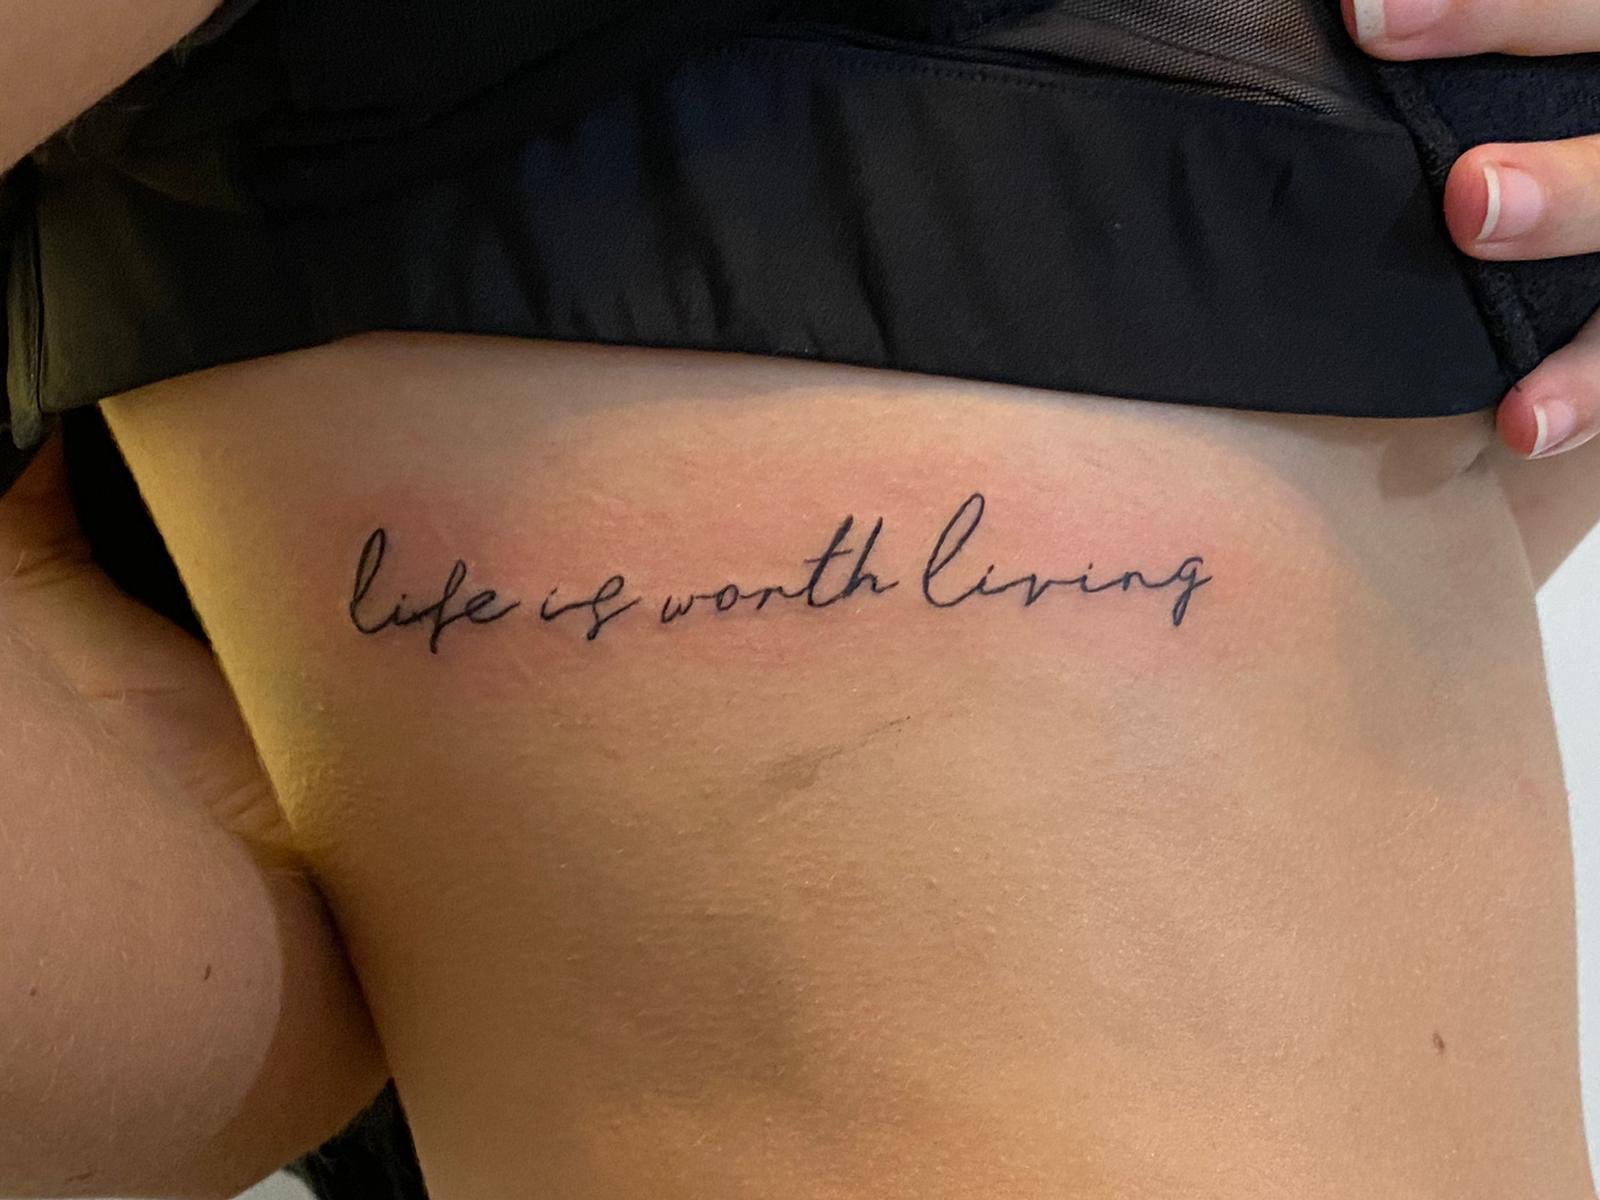 Ink-a-zoid Tattoos - Never trust the living. beetle juice tattoo done by  Scott! #beetlejuice #beetlejuicetattoo #inkazoidtattooshop #johnsoncitytn  #kingsporttn #colorworktattoo | Facebook